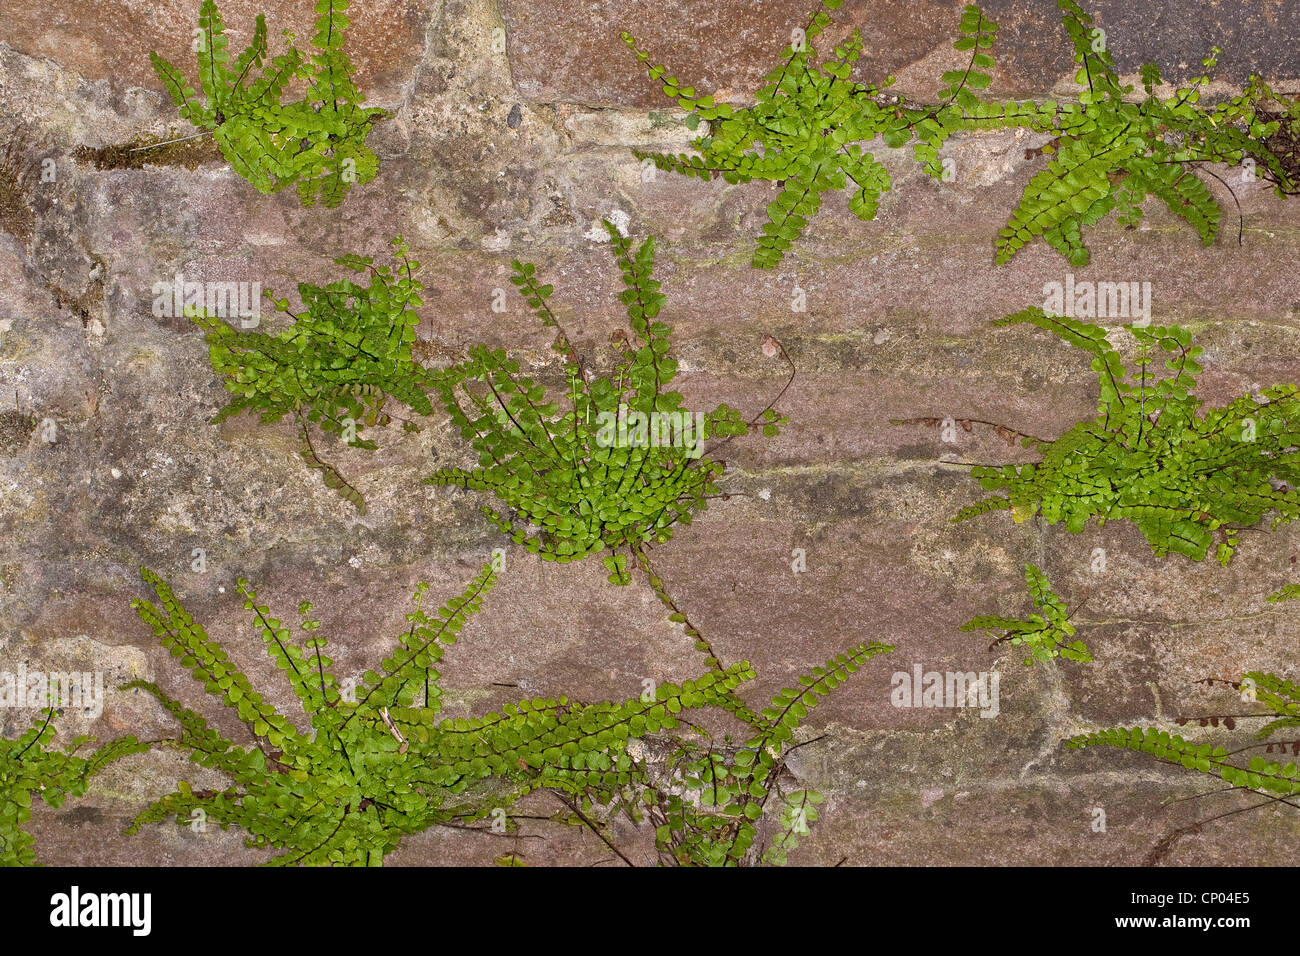 Maidenhair spleenwort, Common maidenhair (Asplenium trichomanes), on an old wall, Germany Stock Photo